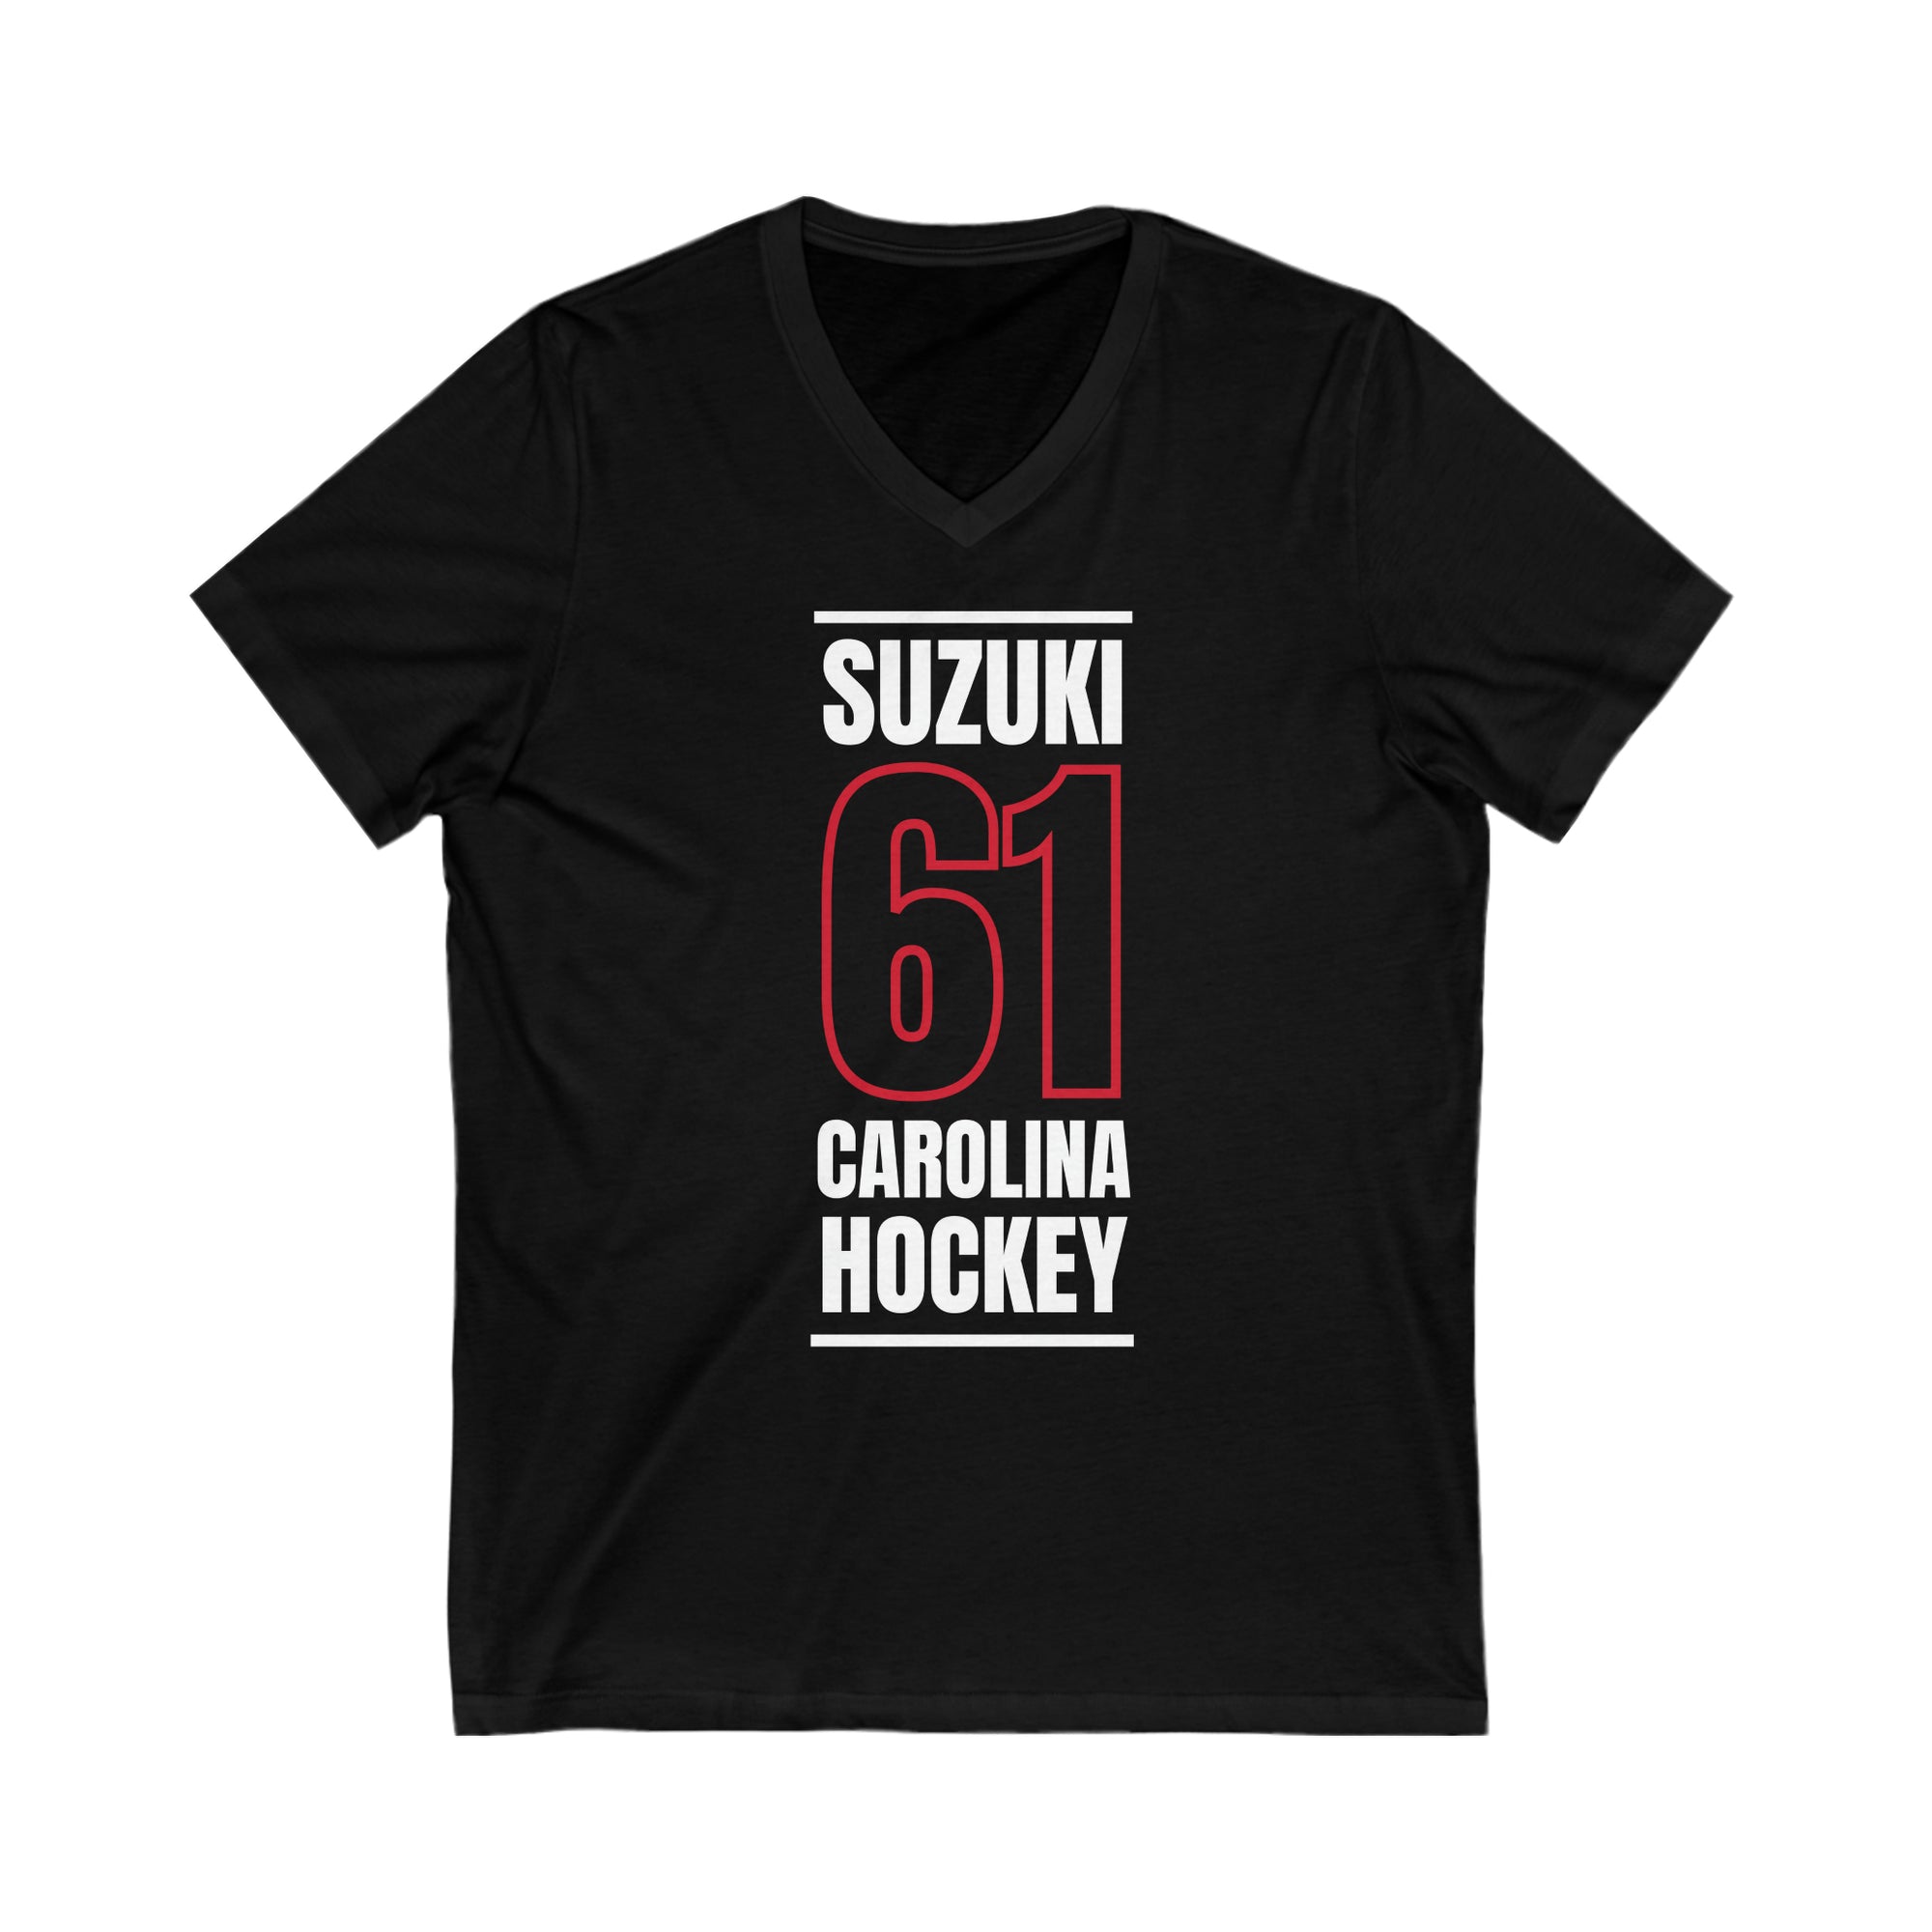 Suzuki 61 Carolina Hockey Black Vertical Design Unisex V-Neck Tee